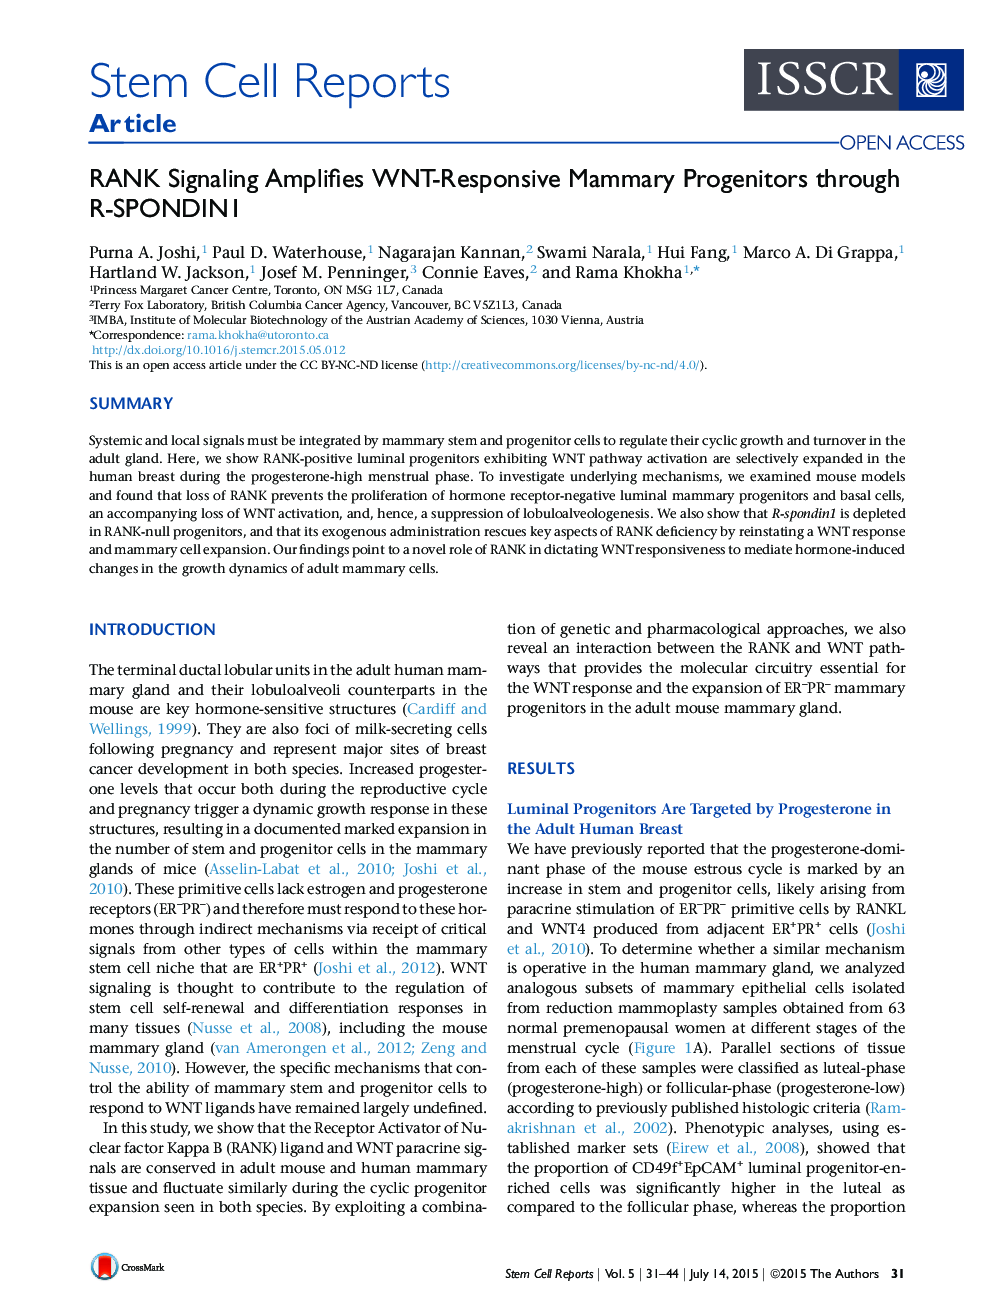 RANK Signaling Amplifies WNT-Responsive Mammary Progenitors through R-SPONDIN1 